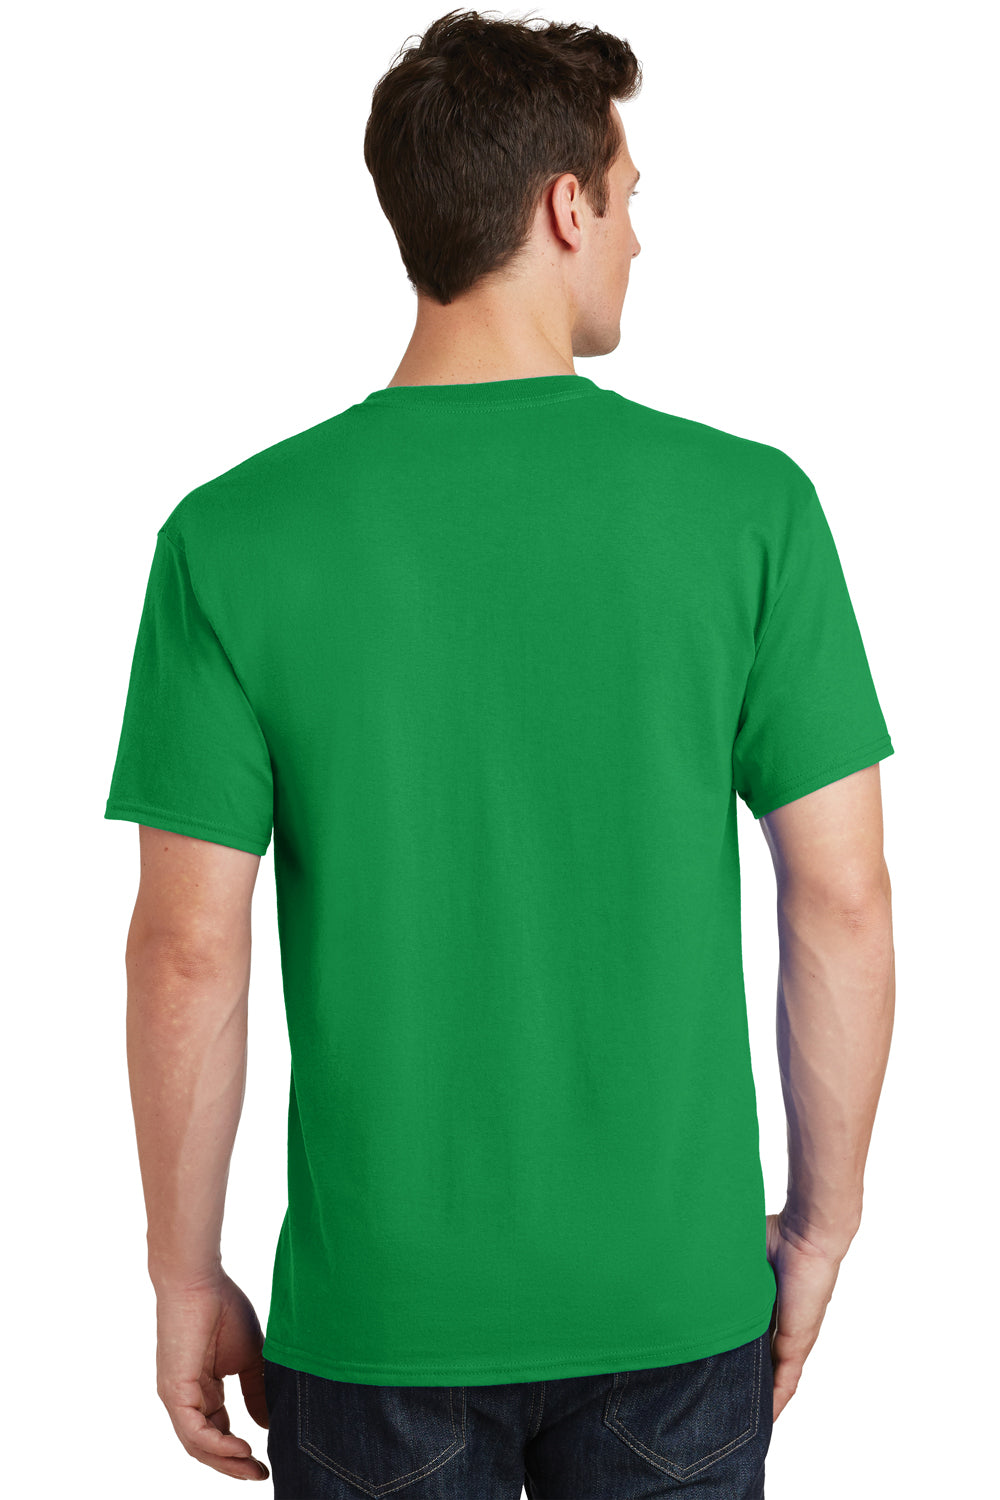 Port & Company PC54 Mens Core Short Sleeve Crewneck T-Shirt Clover Green Back